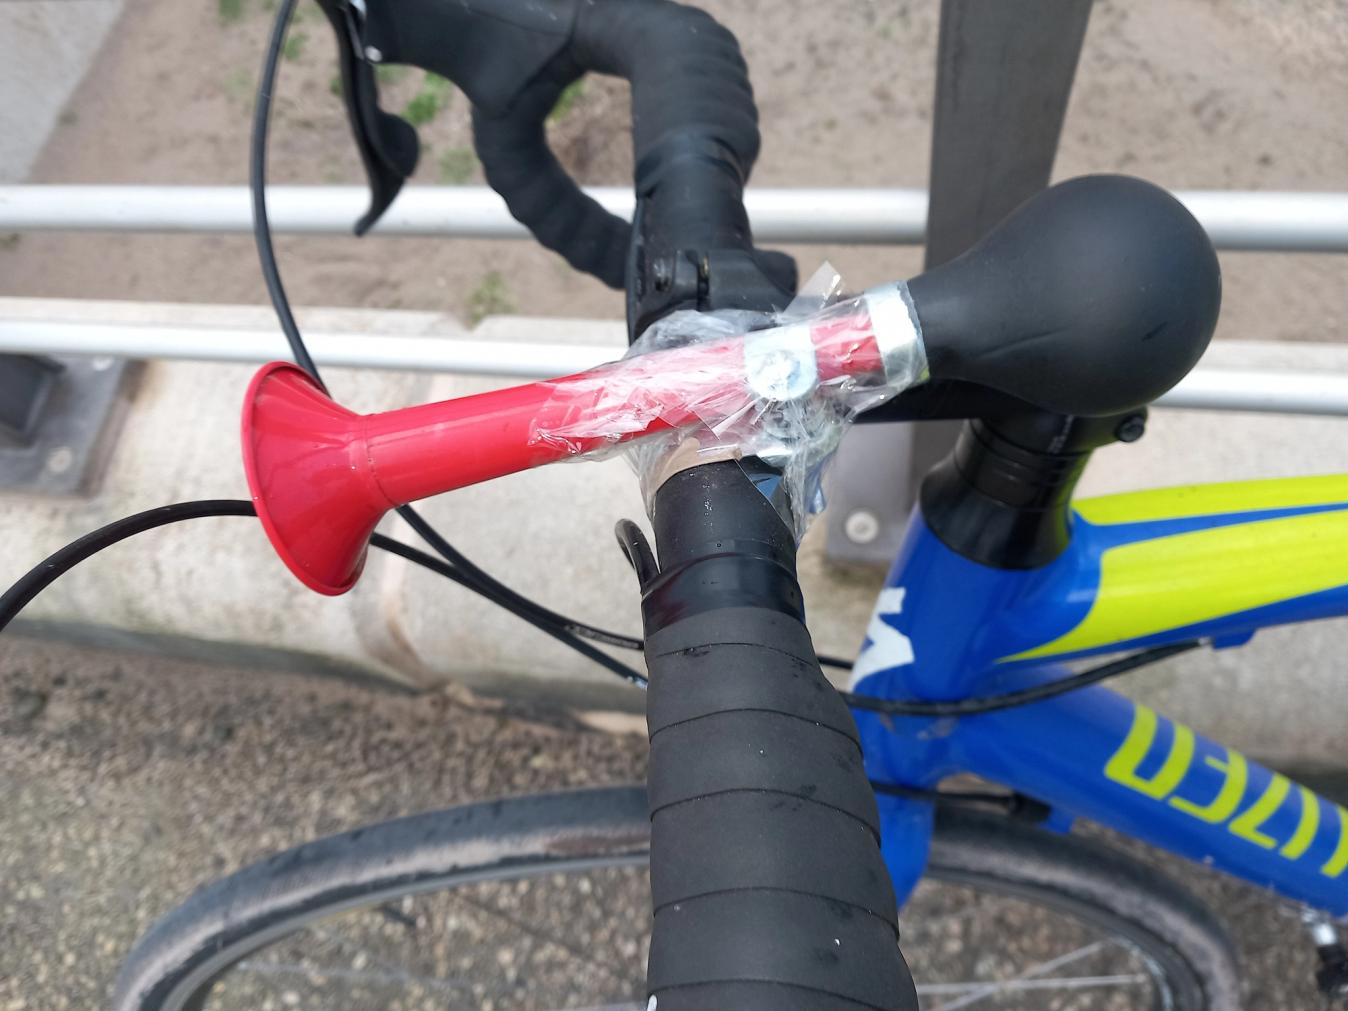 horn sellotaped to bike's handlebars